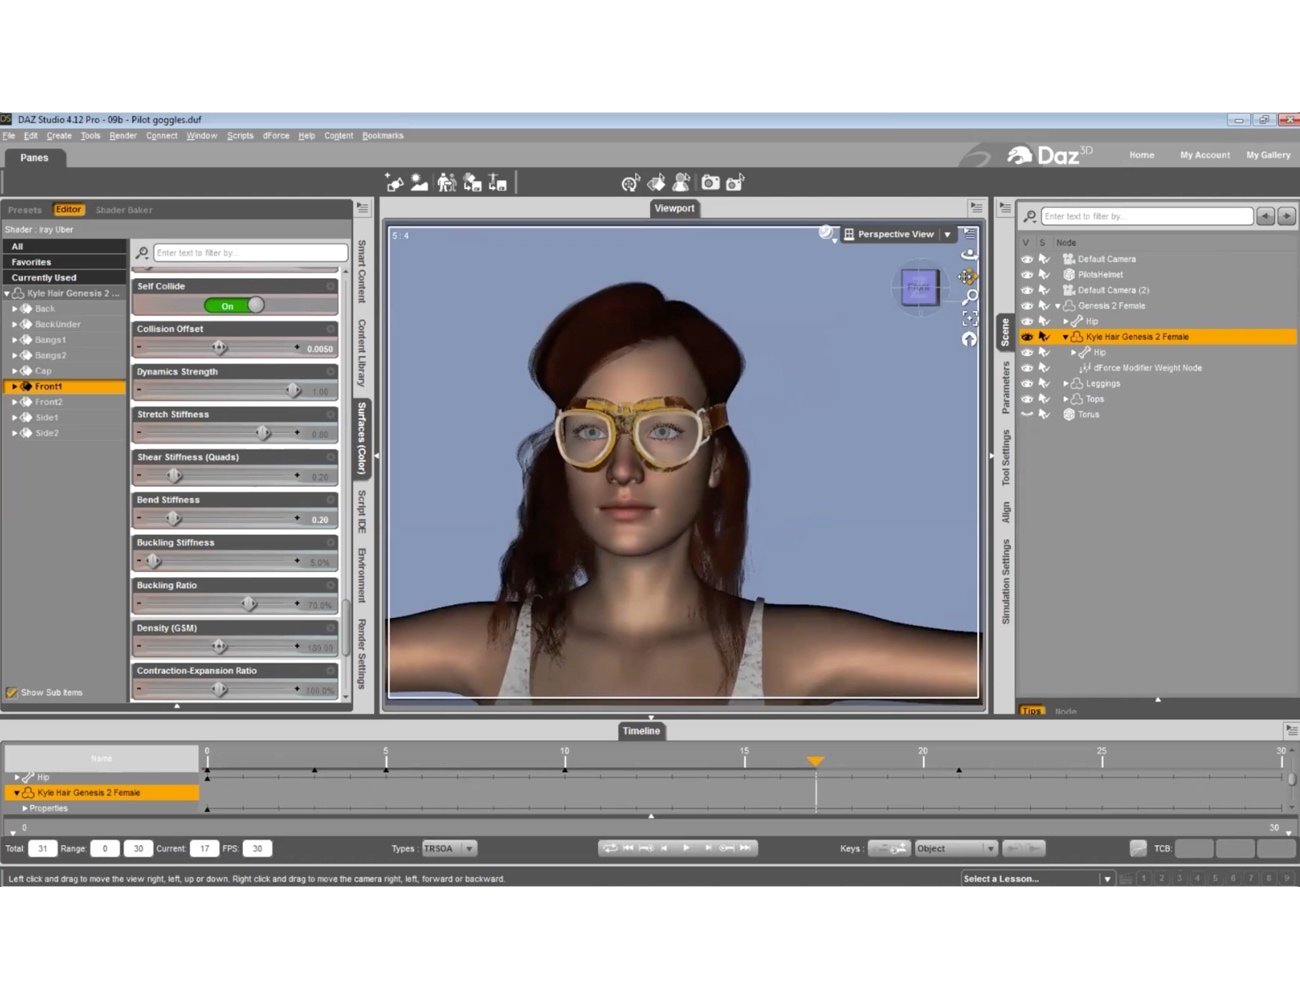 dForce Expert Guide : Tutorial Course by: Digital Art Live, 3D Models by Daz 3D